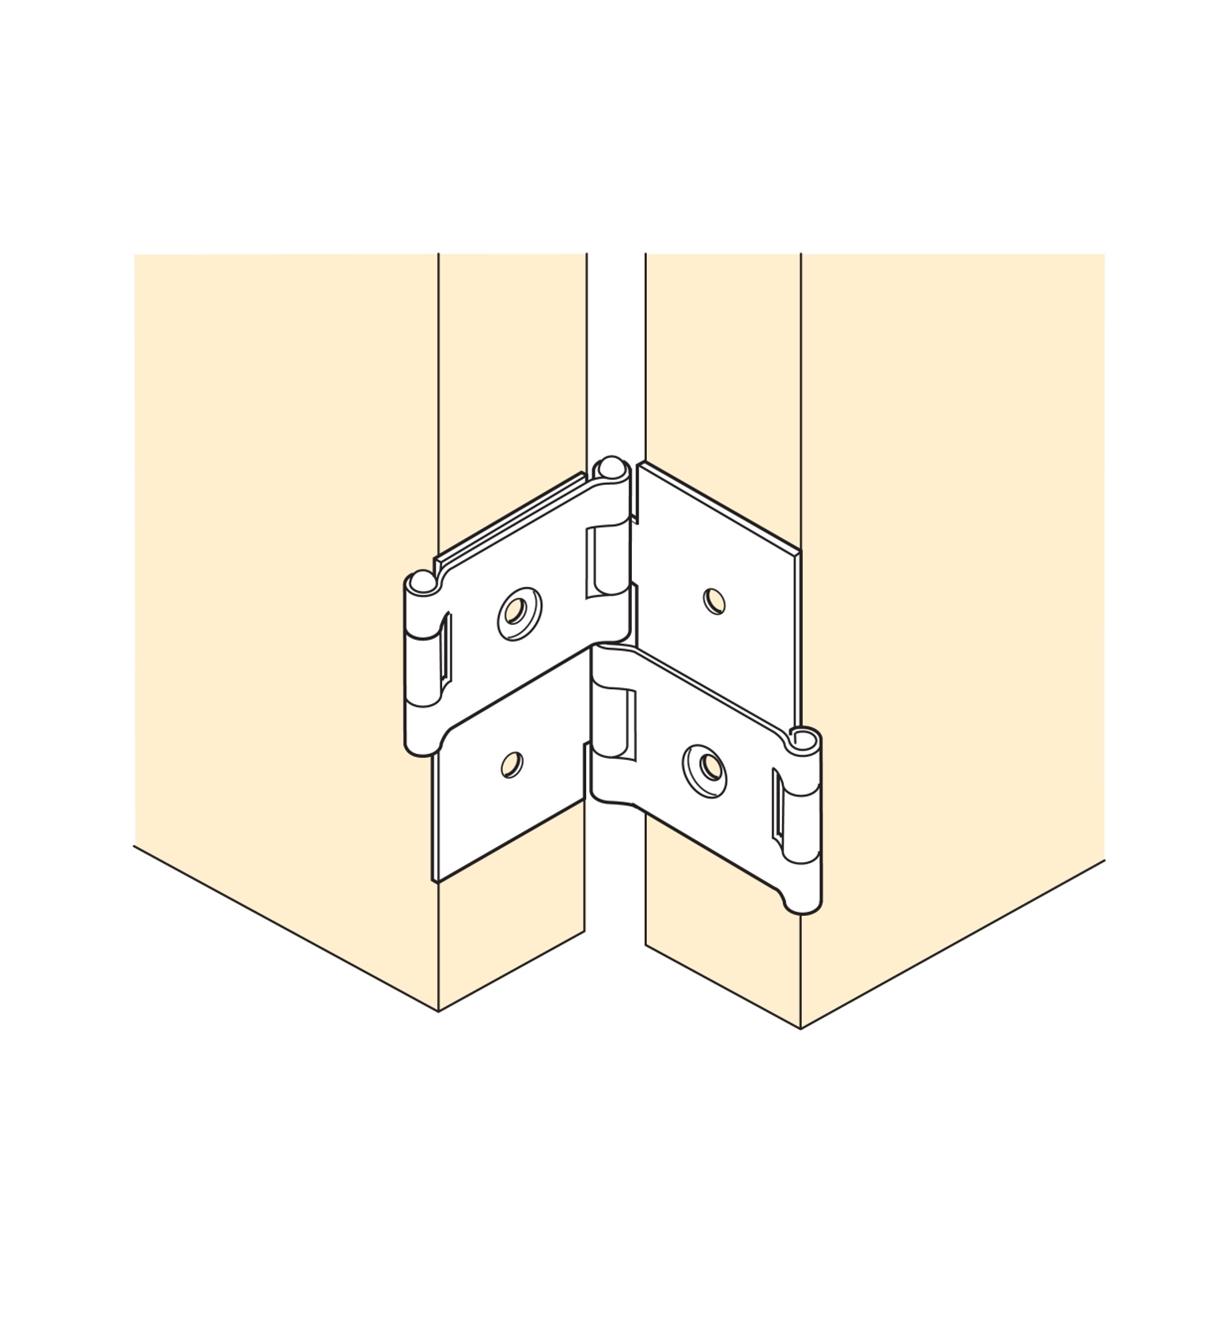 Illustration of hinge joining two panels